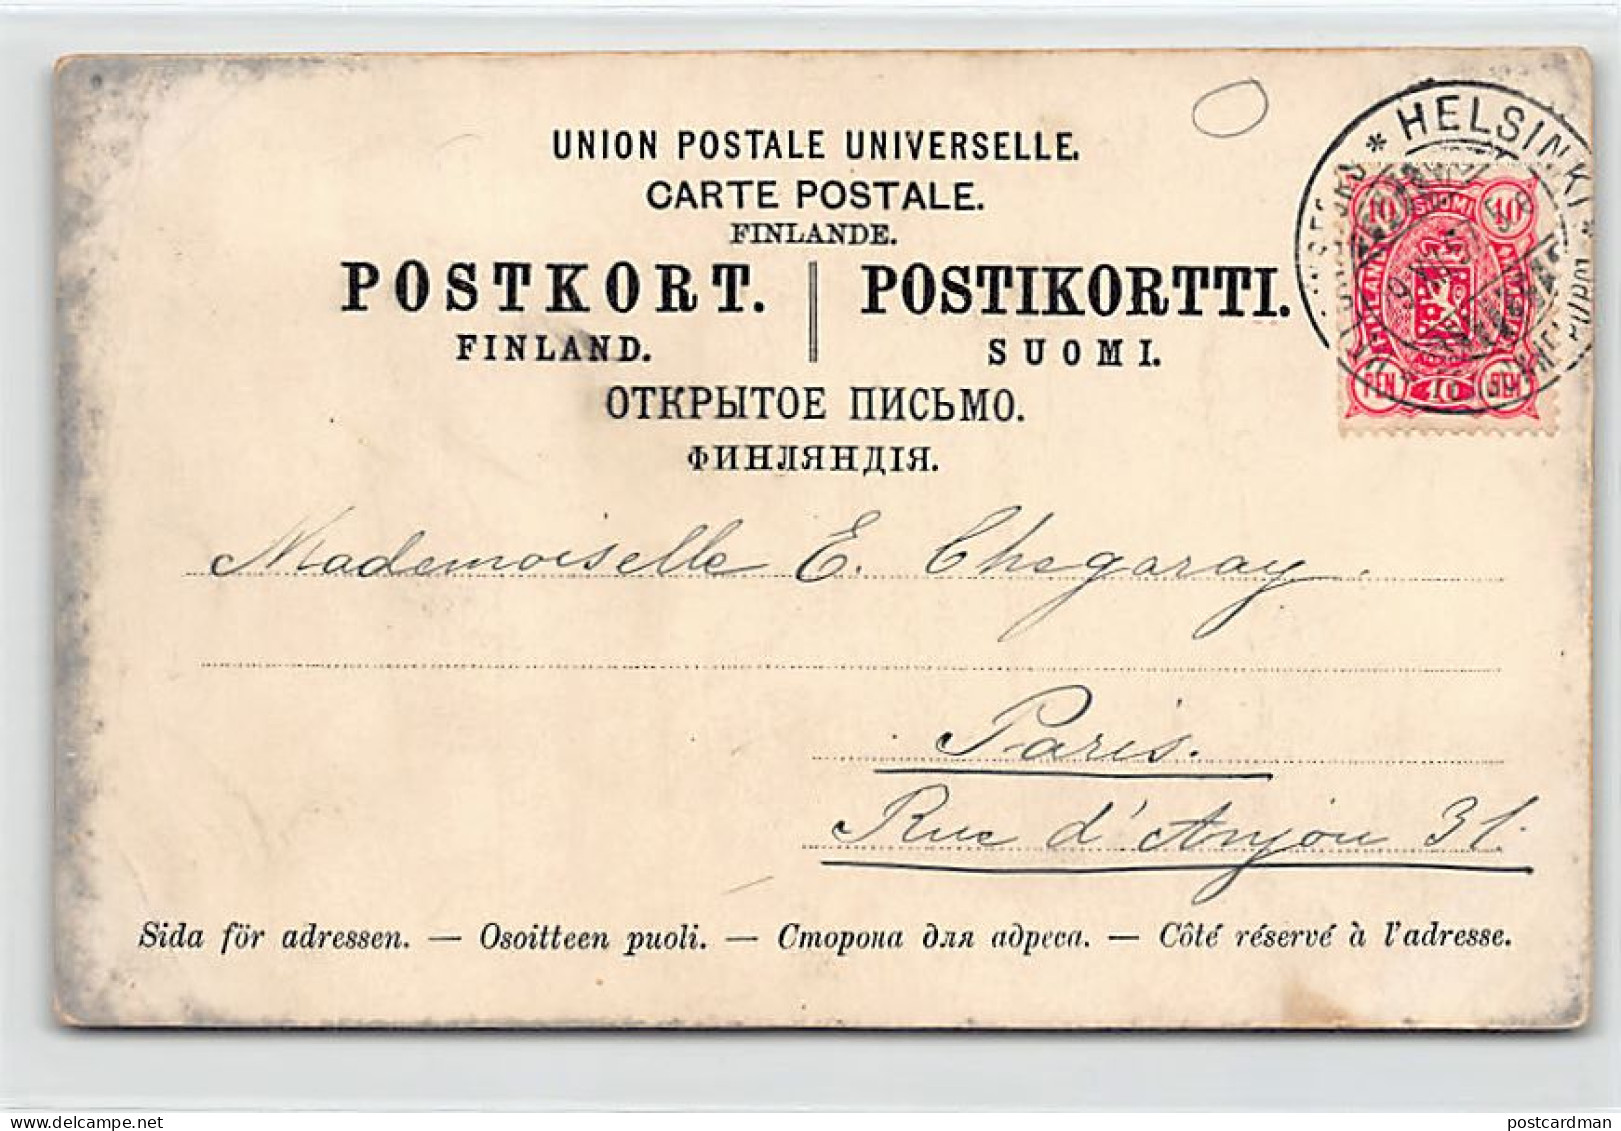 Finland - HELSINKI - Litho Postcard - YEAR 1897 - Publ. F. Tilgmann  - Finland